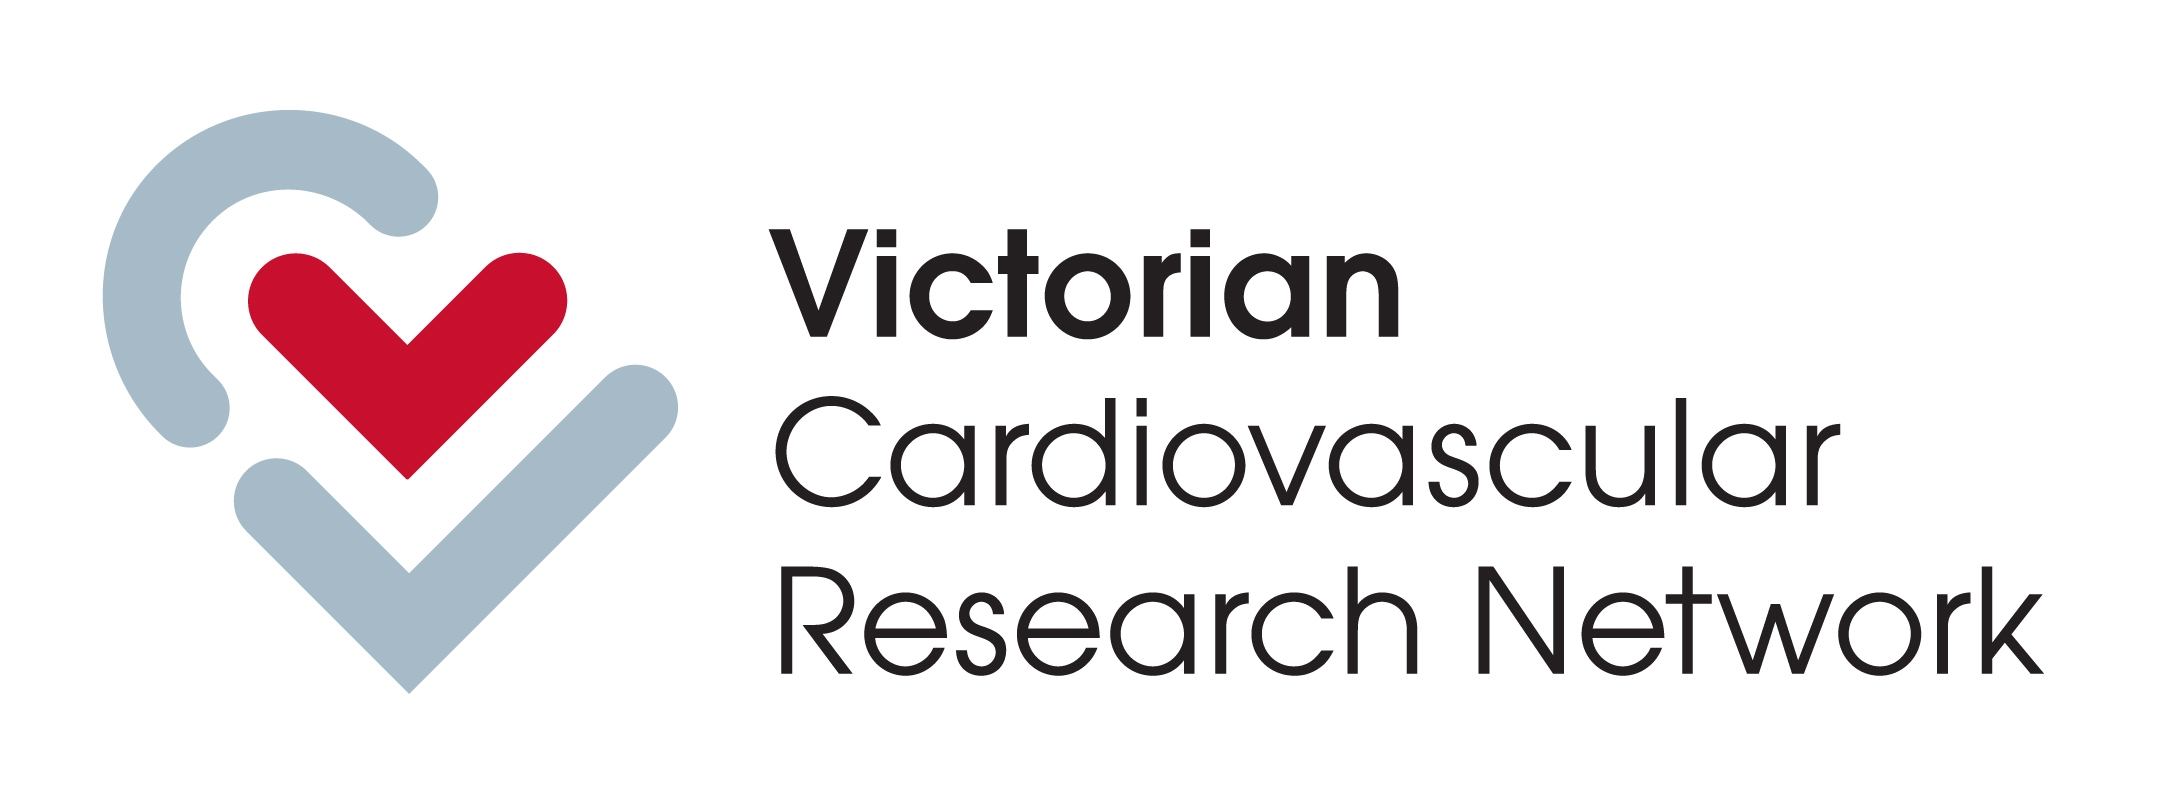 Victorian Cardiovascular Research Network (VIC CVRN)